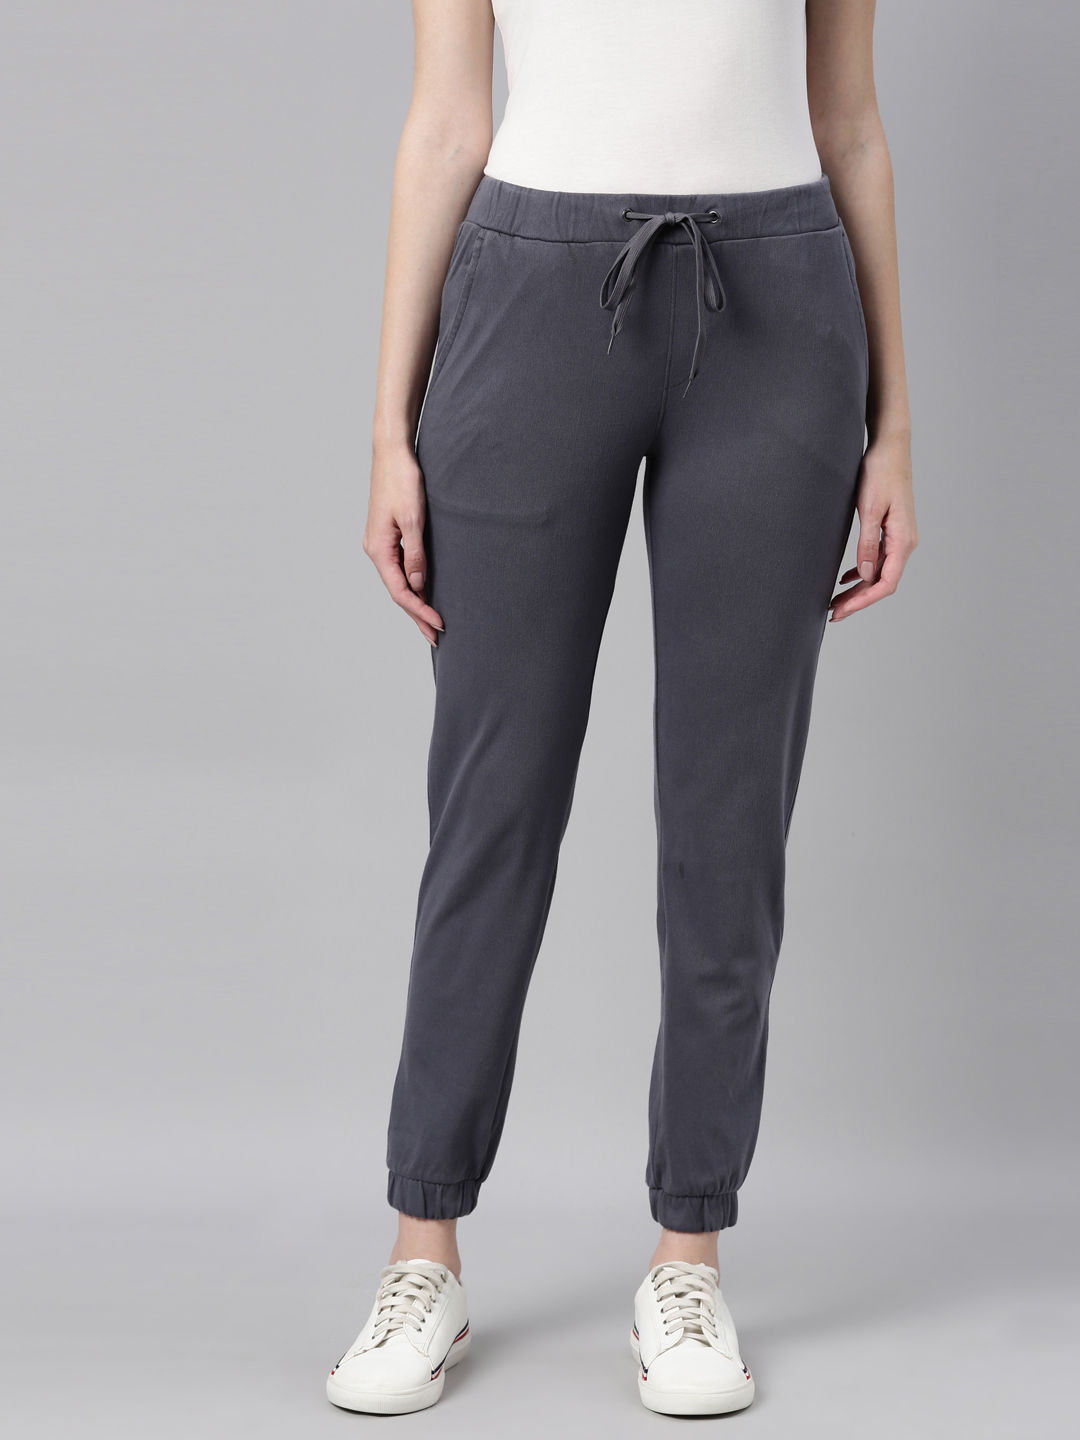 Dark gray jogger pants  HOWTOWEAR Fashion